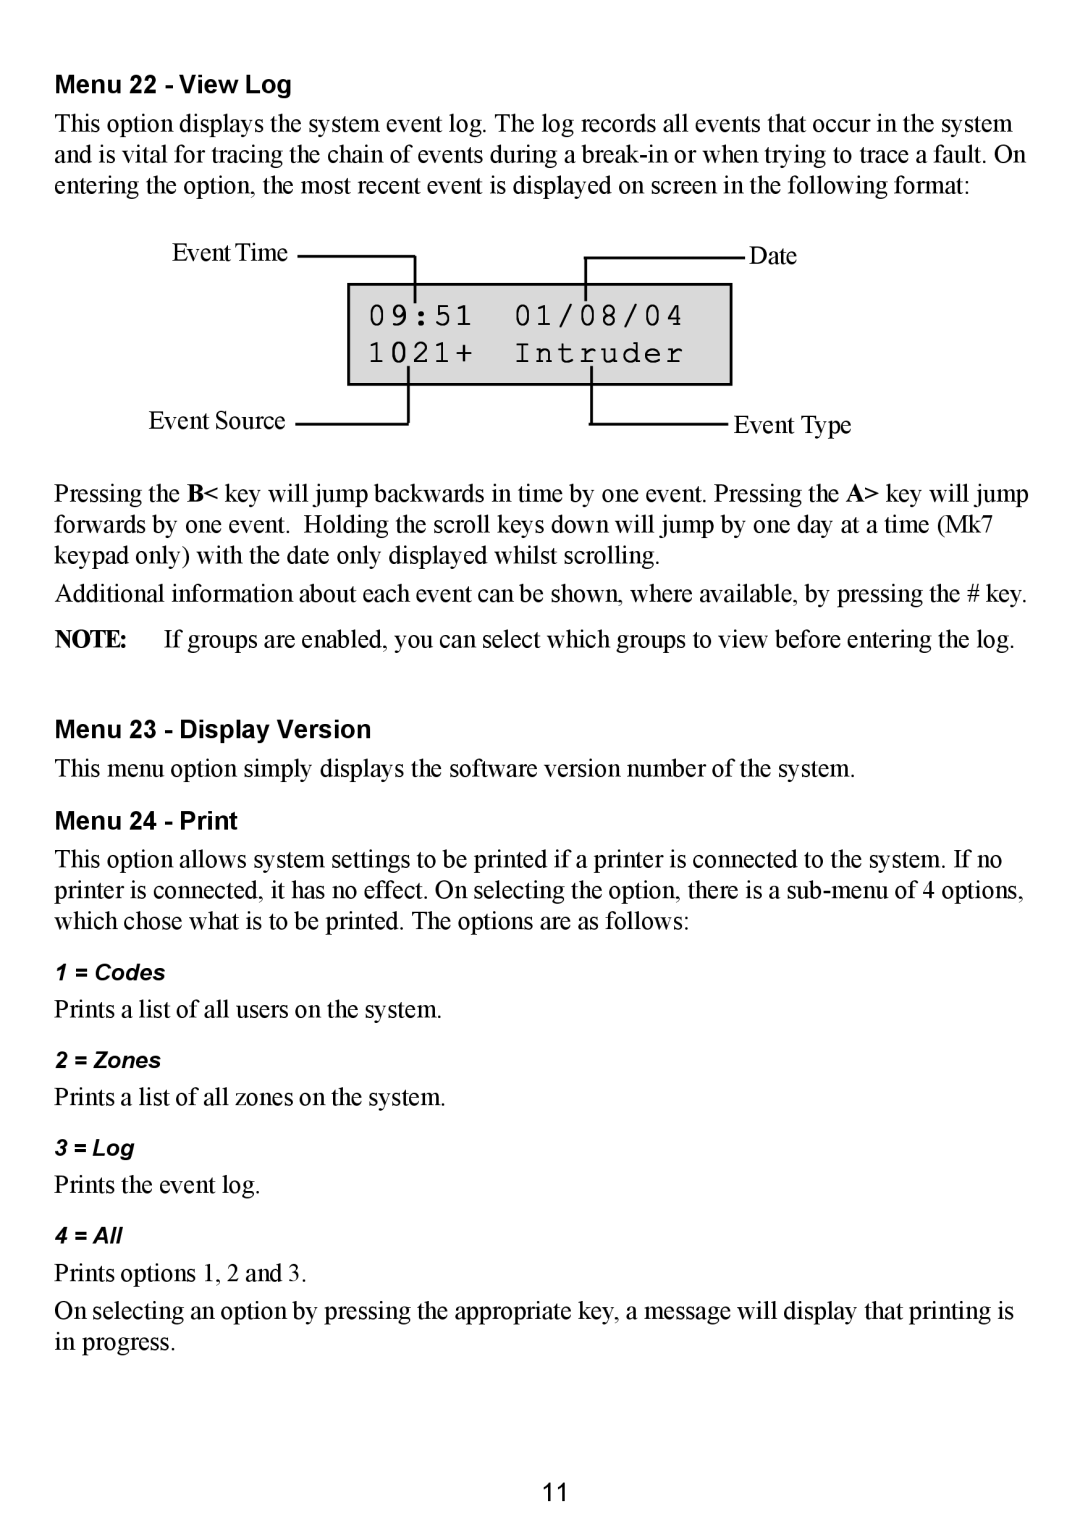 Honeywell Galaxy 2 manual 09 51 01/08/04 1021+ Intruder, Menu 22 - View Log, Menu 23 - Display Version, Menu 24 - Print 